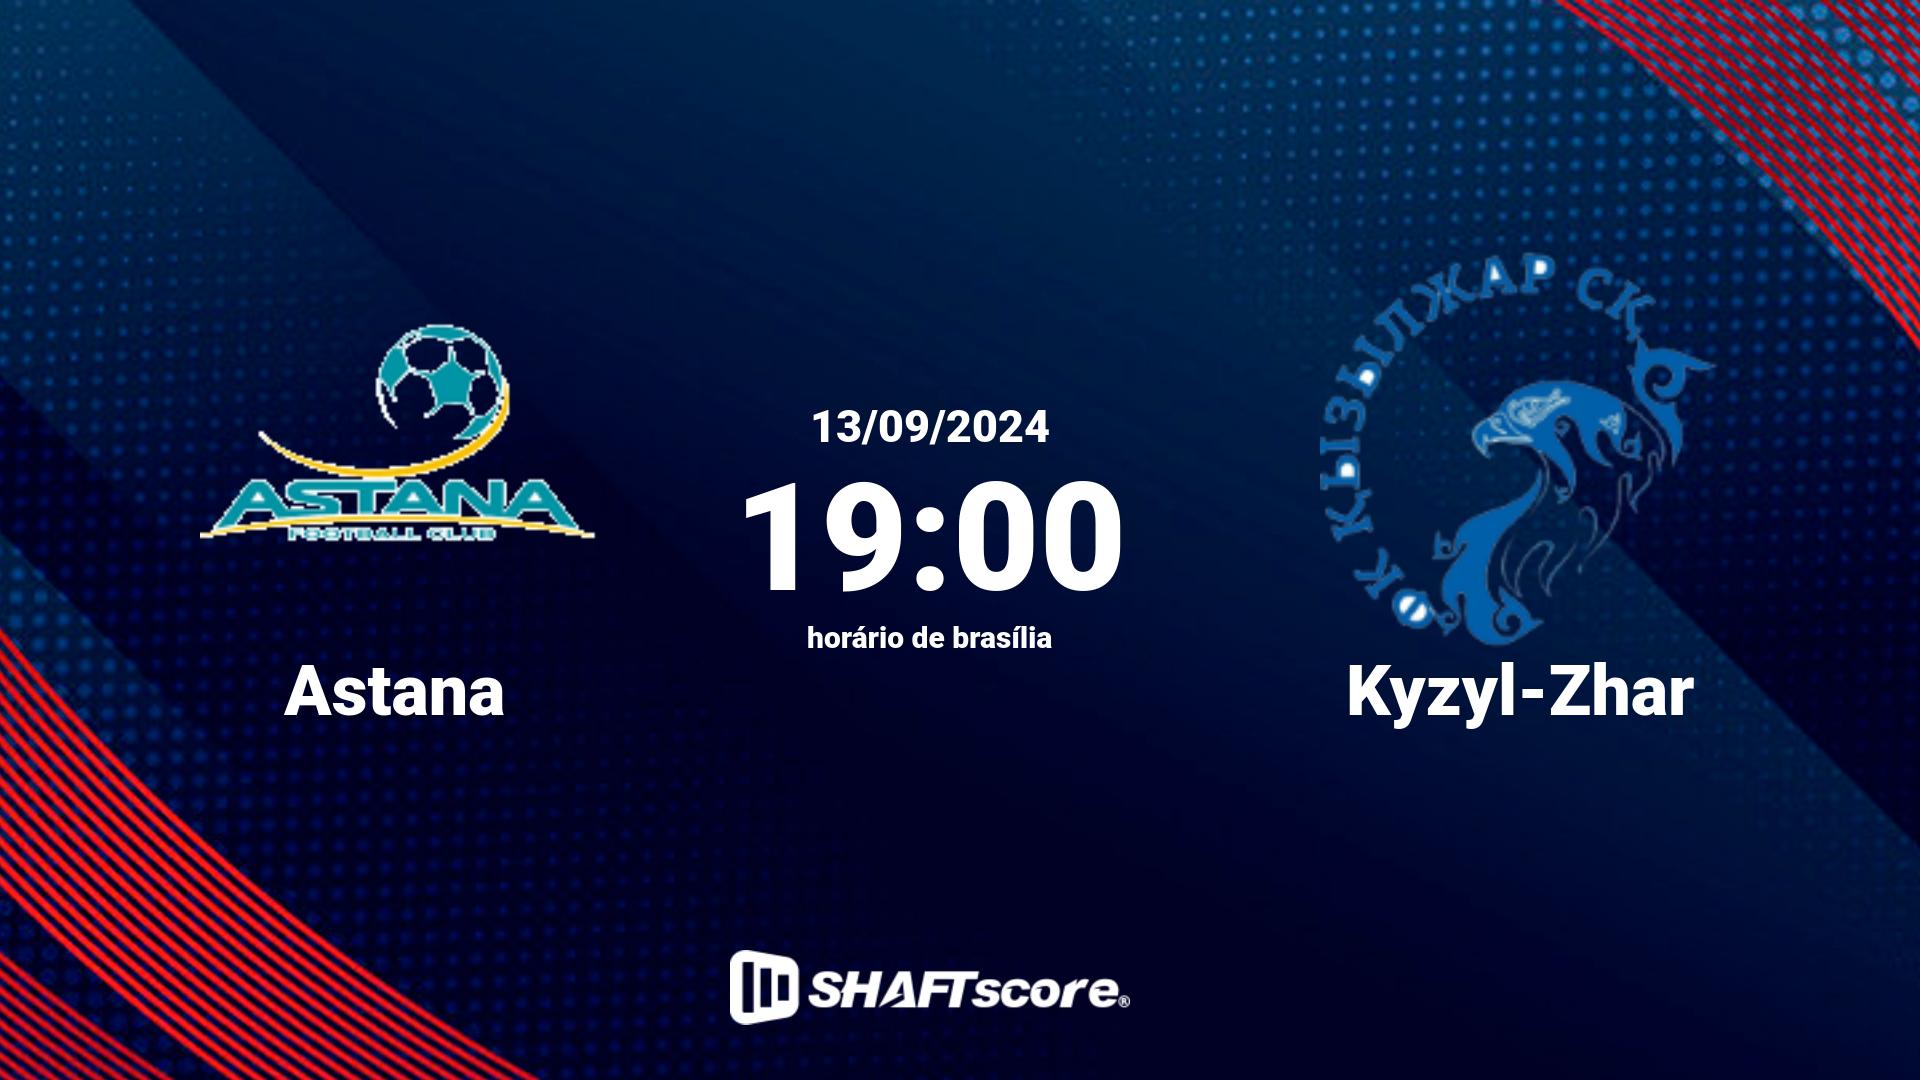 Estatísticas do jogo Astana vs Kyzyl-Zhar 13.09 19:00